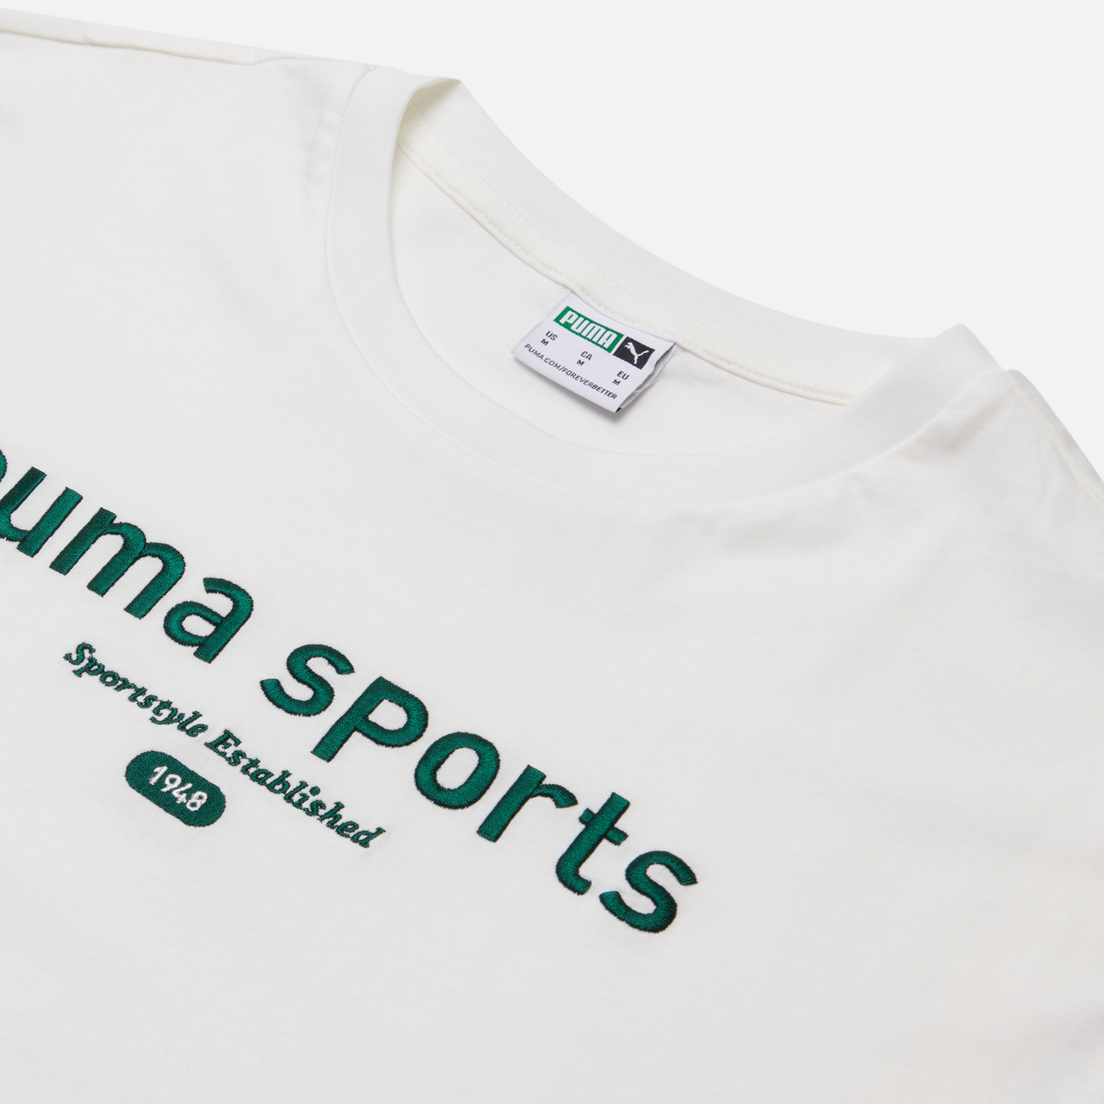 Puma Мужская футболка Puma Sports Team Graphic